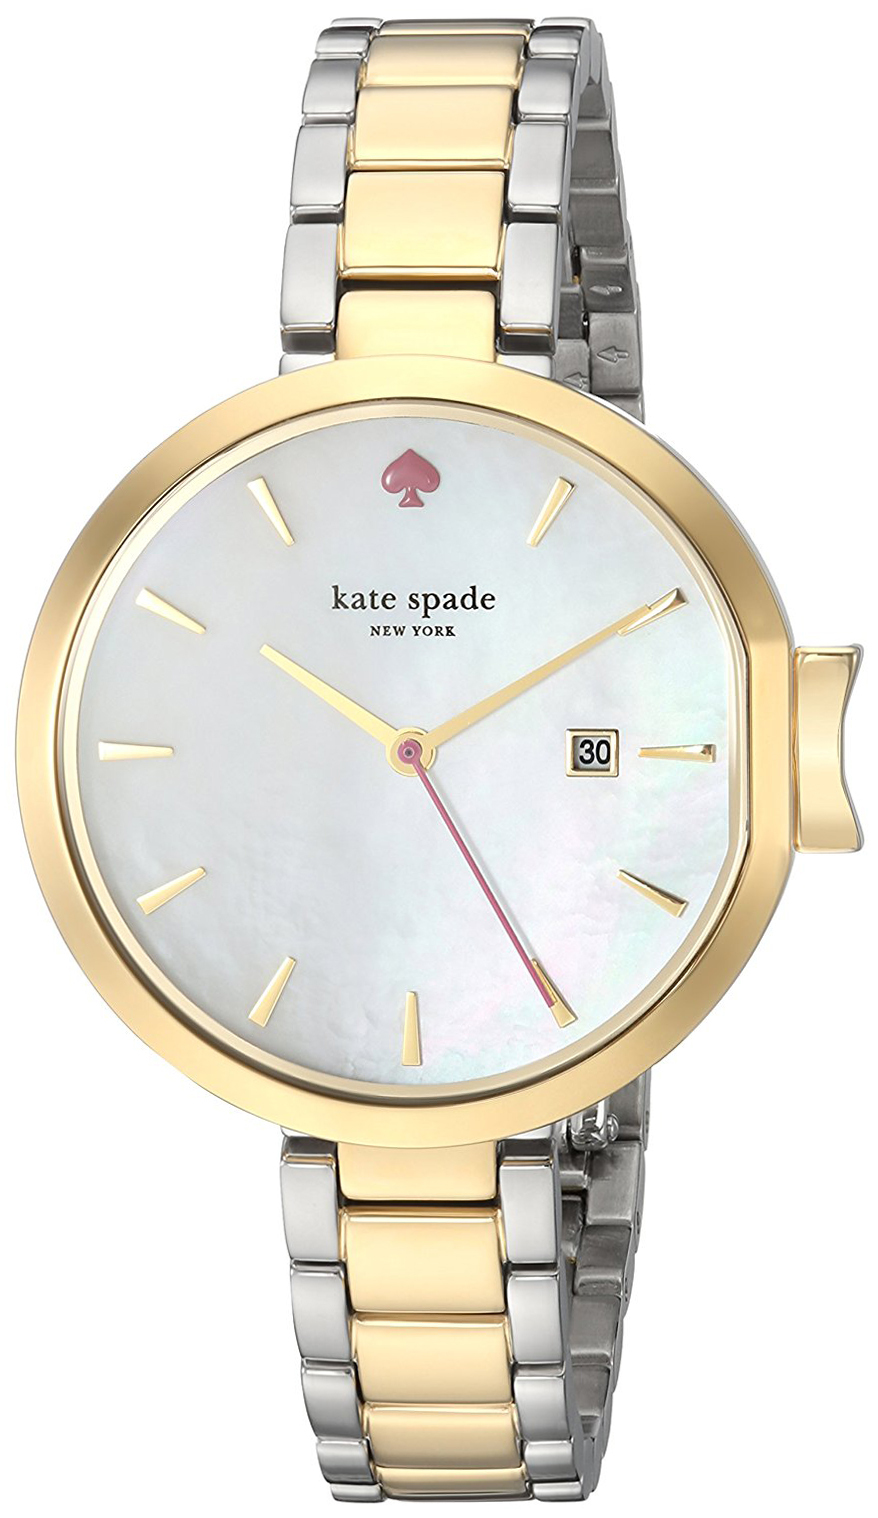 Kate Spade 99999 Damklocka KSW1338 Vit/Gulguldtonat stål Ø34 mm - Kate Spade